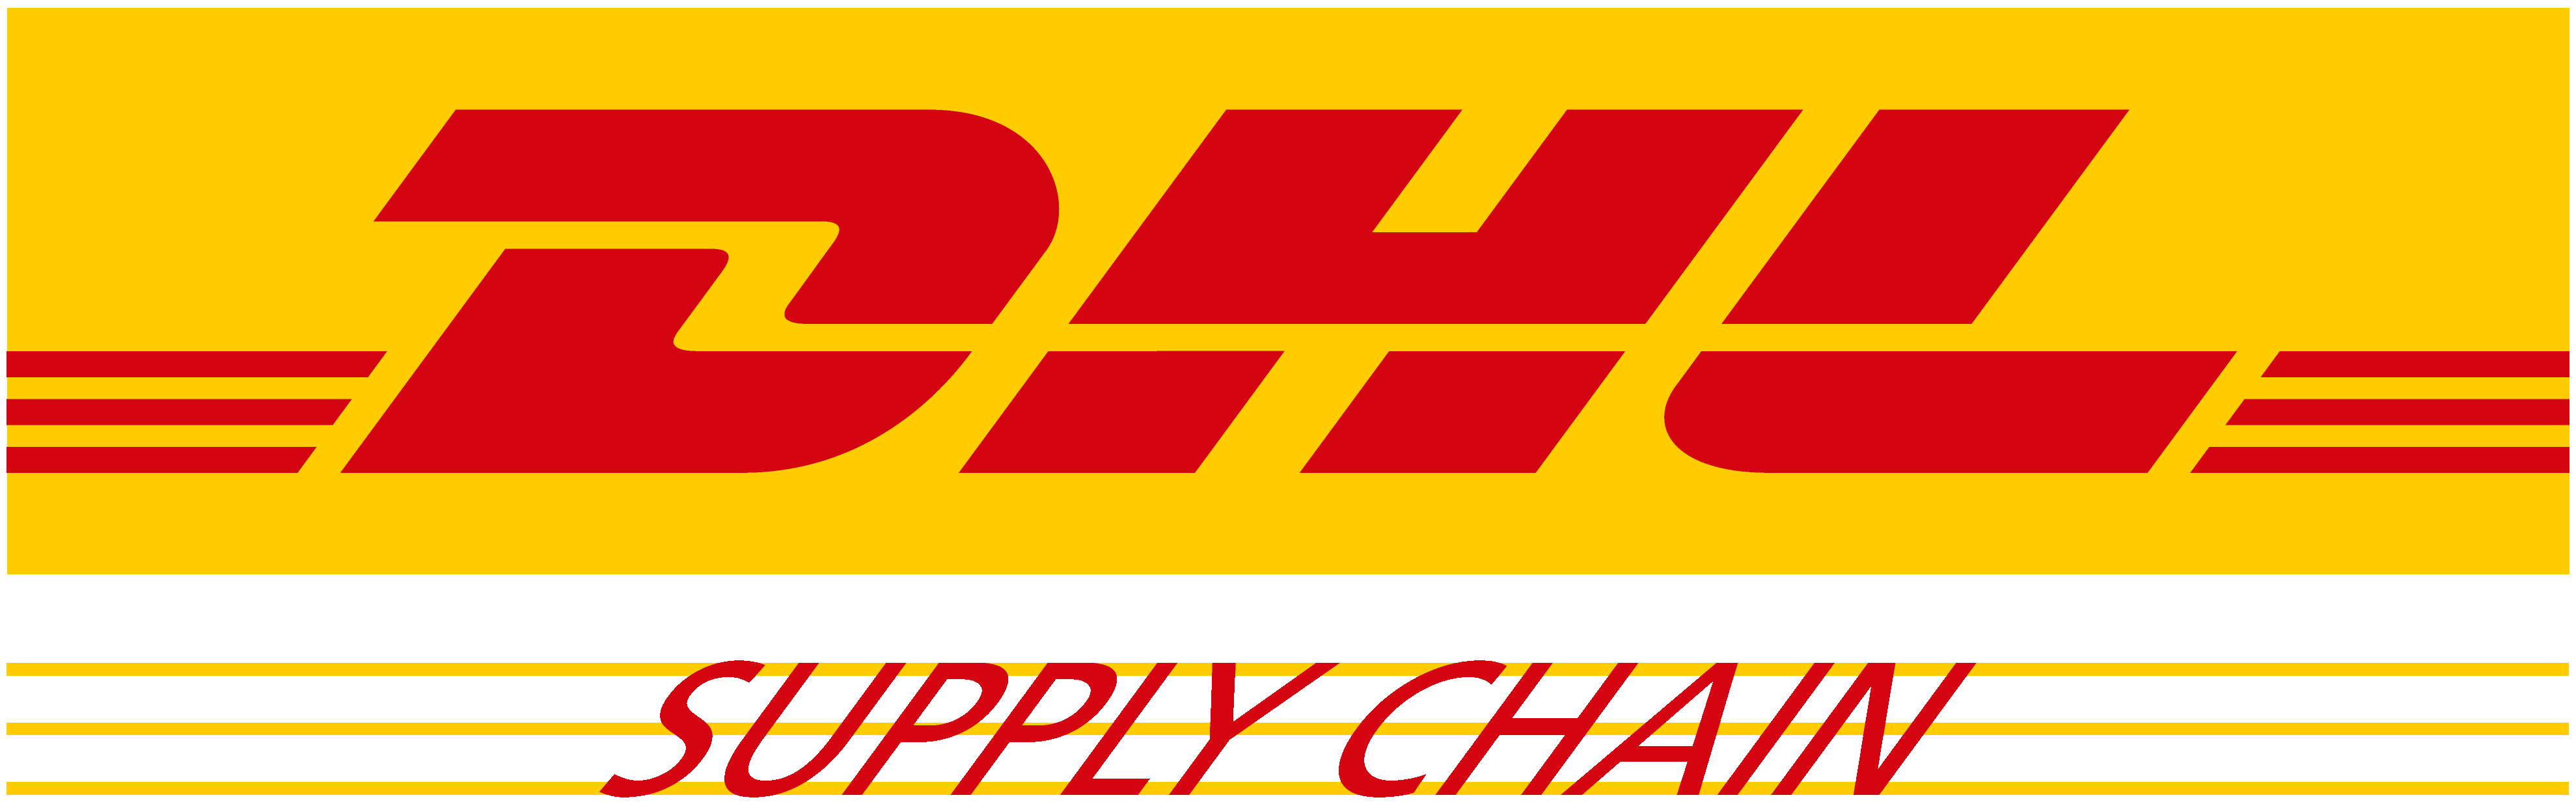 DHL Supply Chain Logo - Motorola solution for DHL Supply Chain warehouse - SFL Mobile Radio